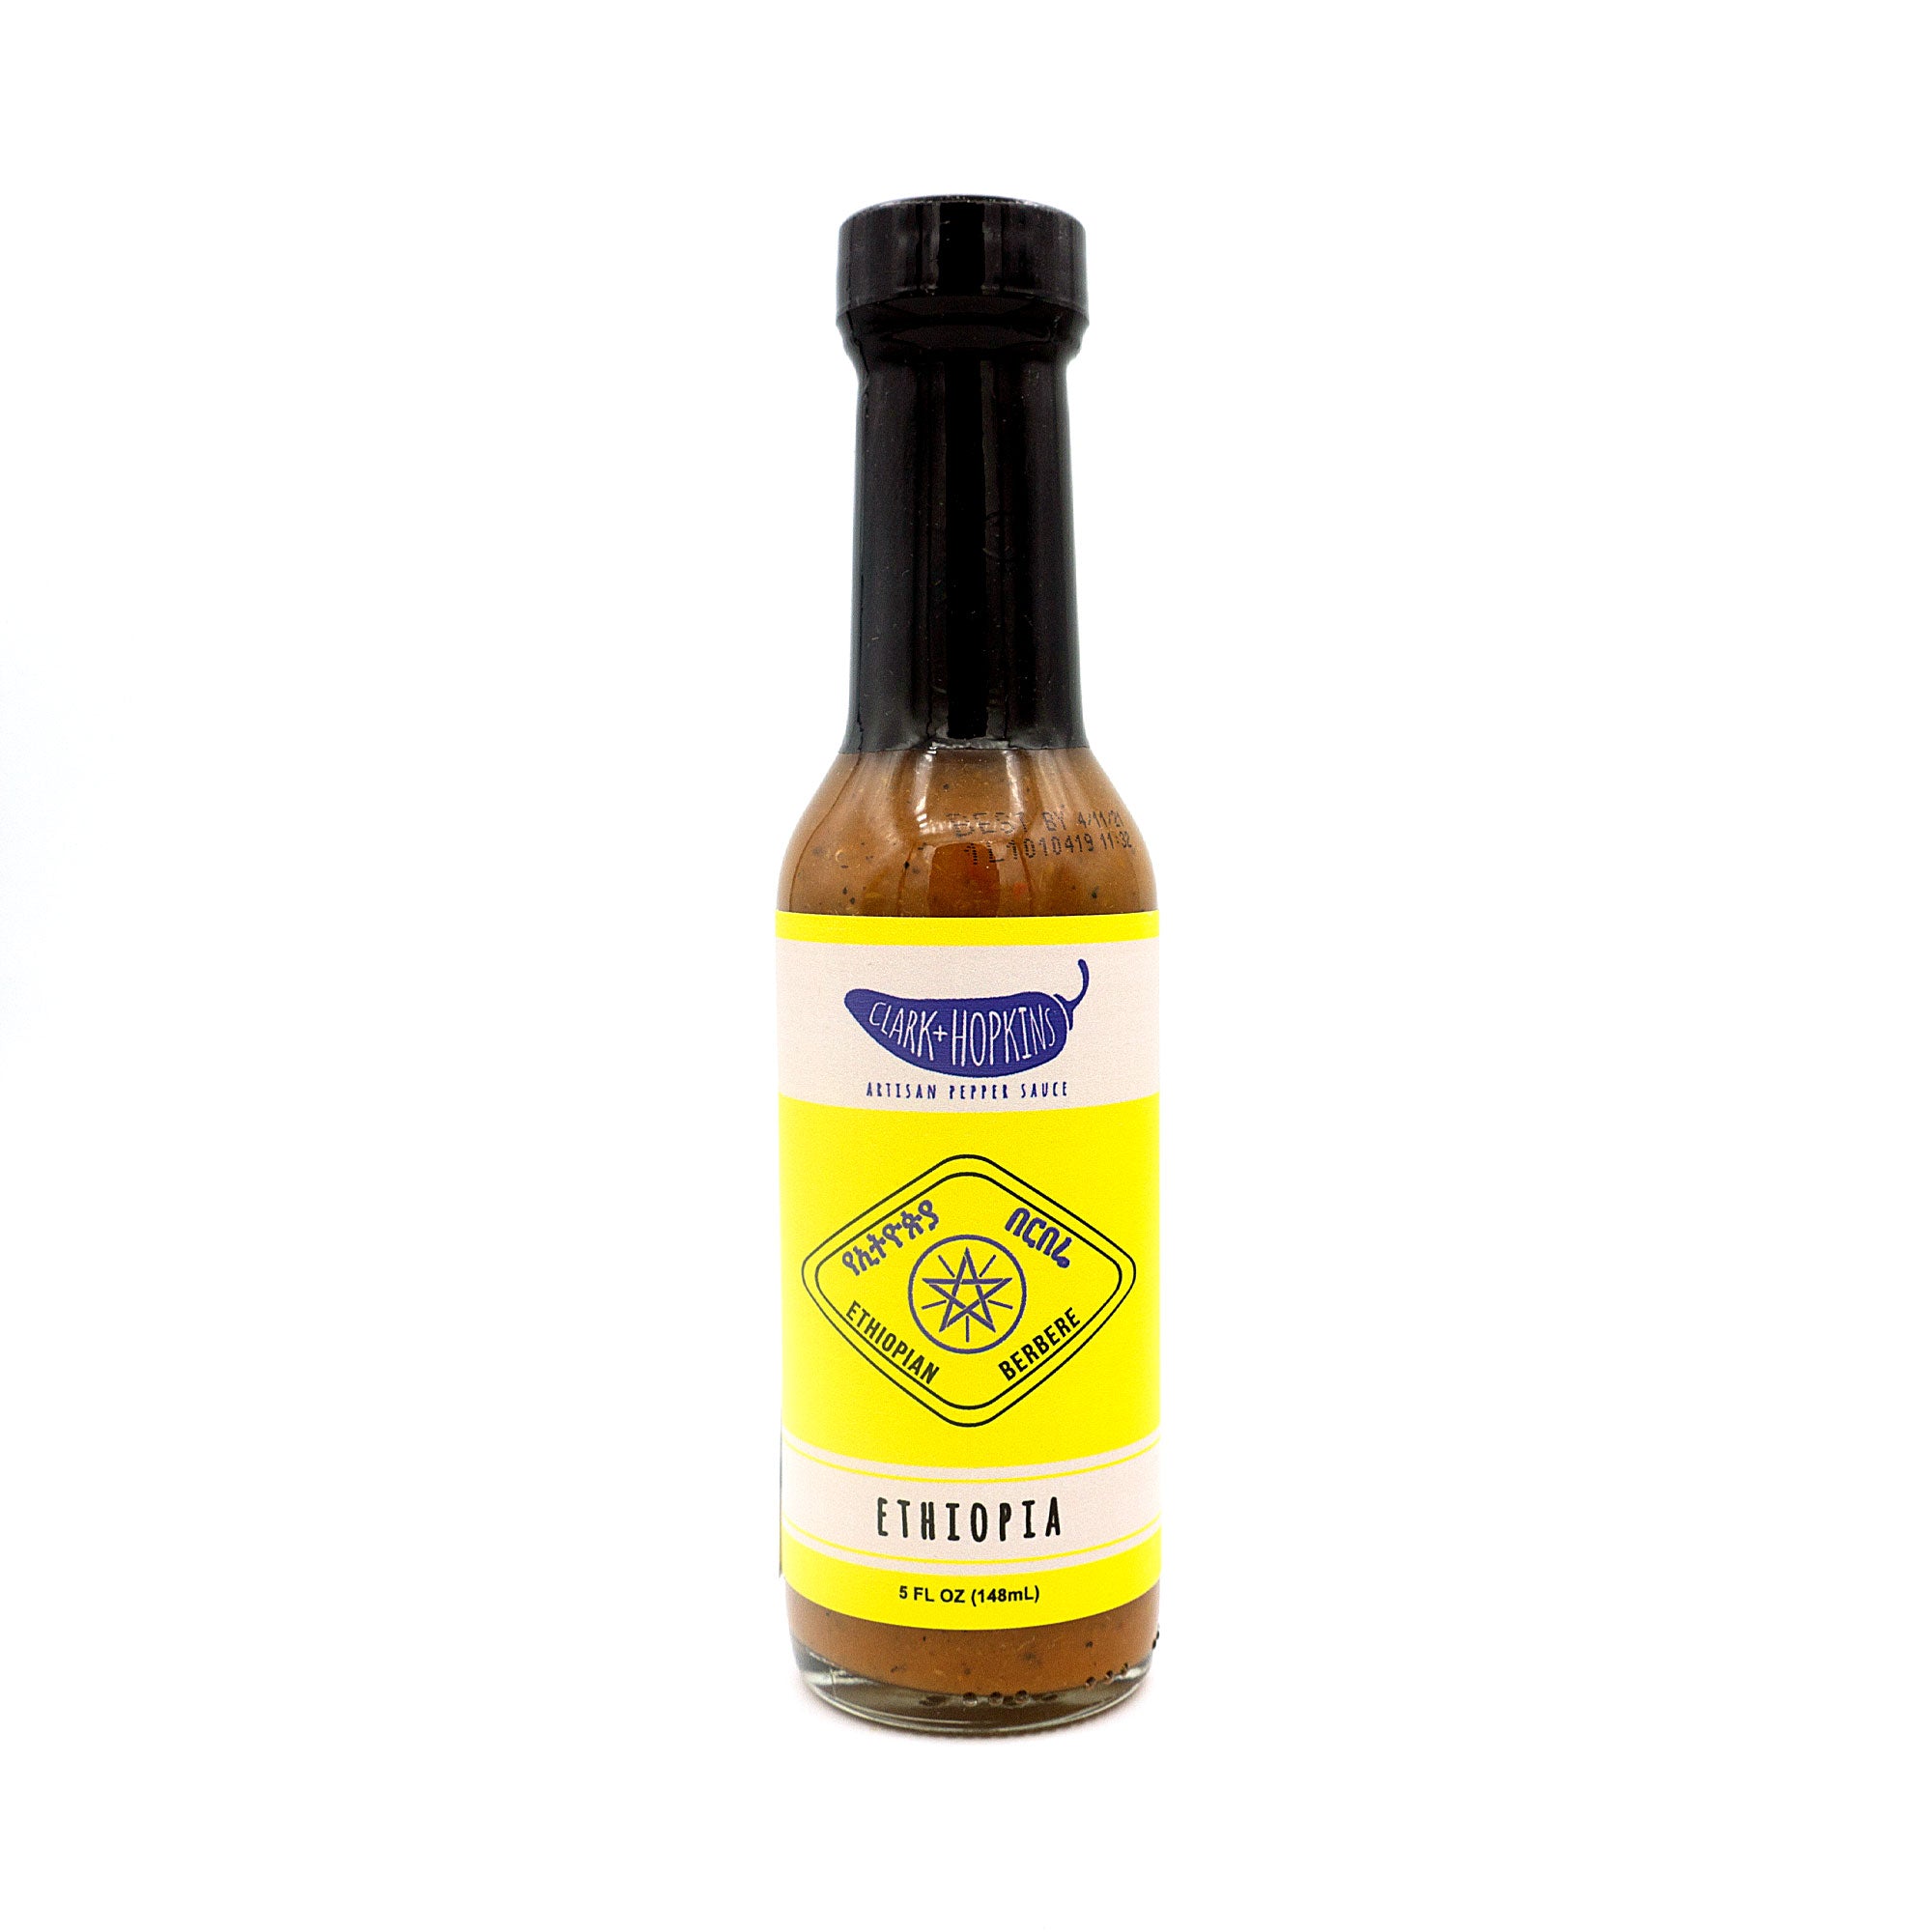 Buy Scorpion de sauce 4 -Pack Online Senegal